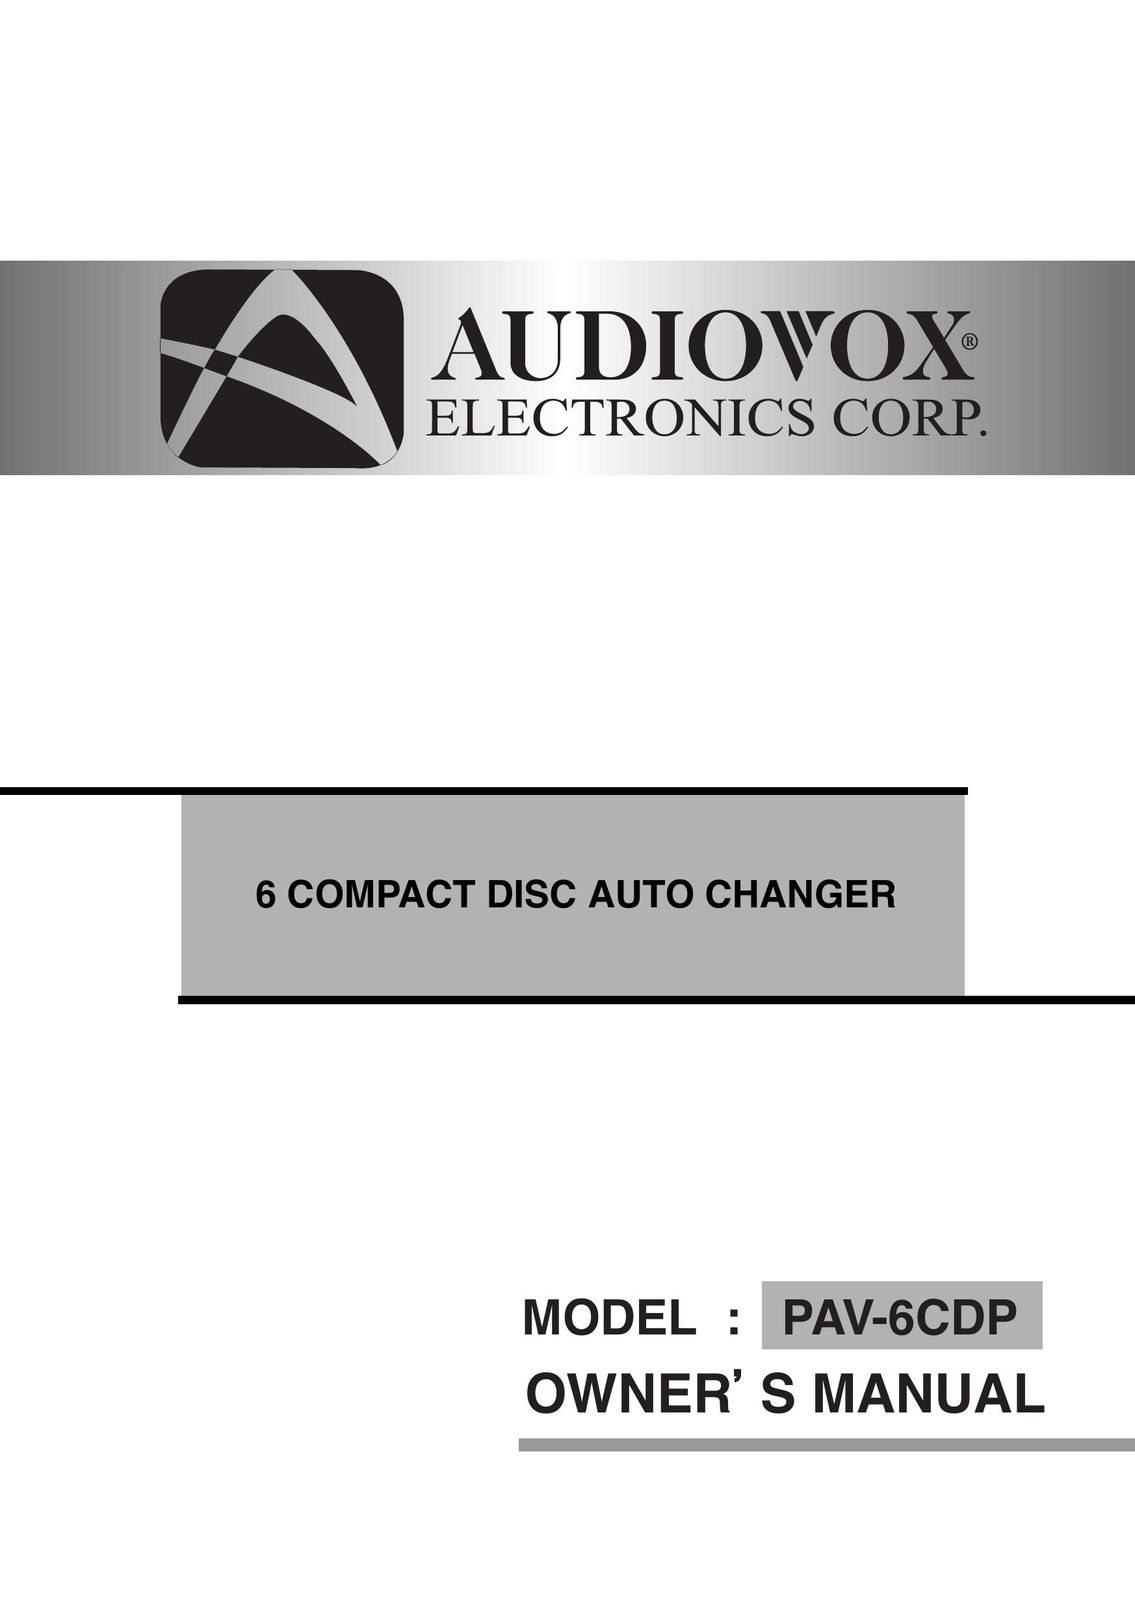 Audiovox SP6CDP CD Player User Manual